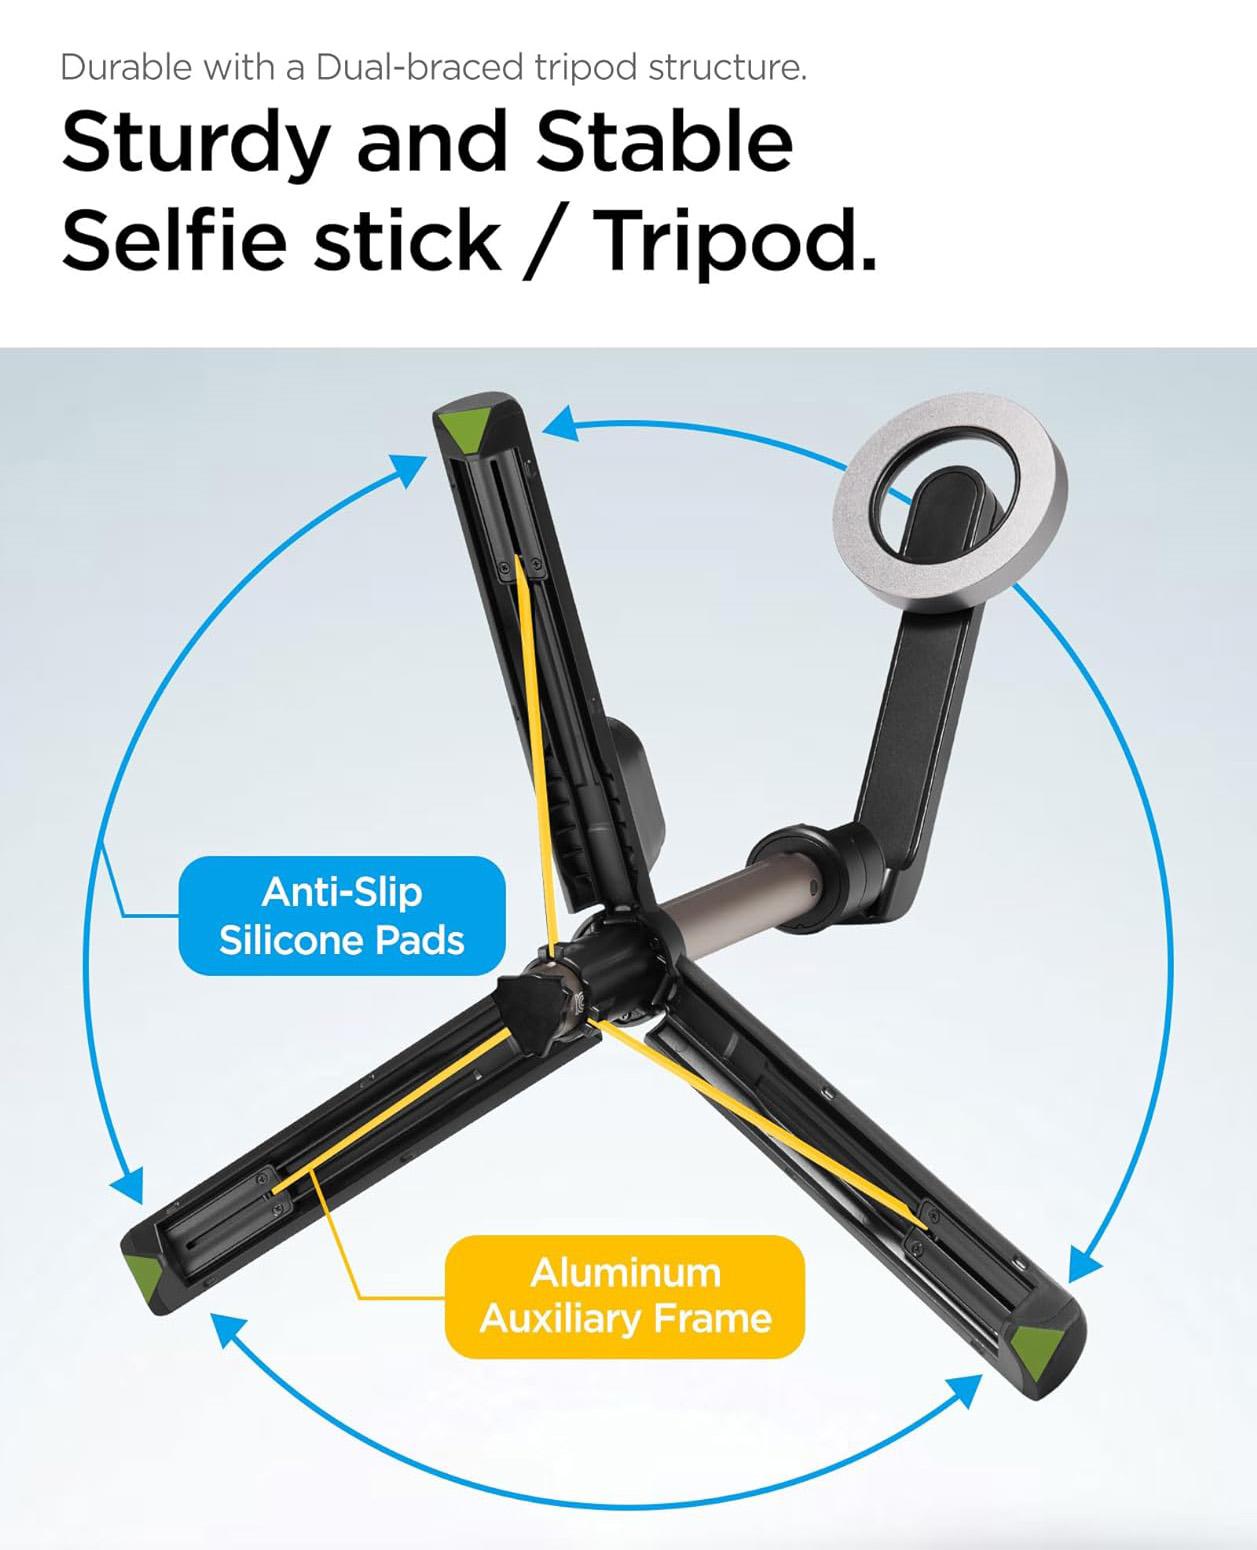 Spigen® S570W AMP06402 (MagFit) MagSafe Bluetooth Selfie Stick Tripod – Black